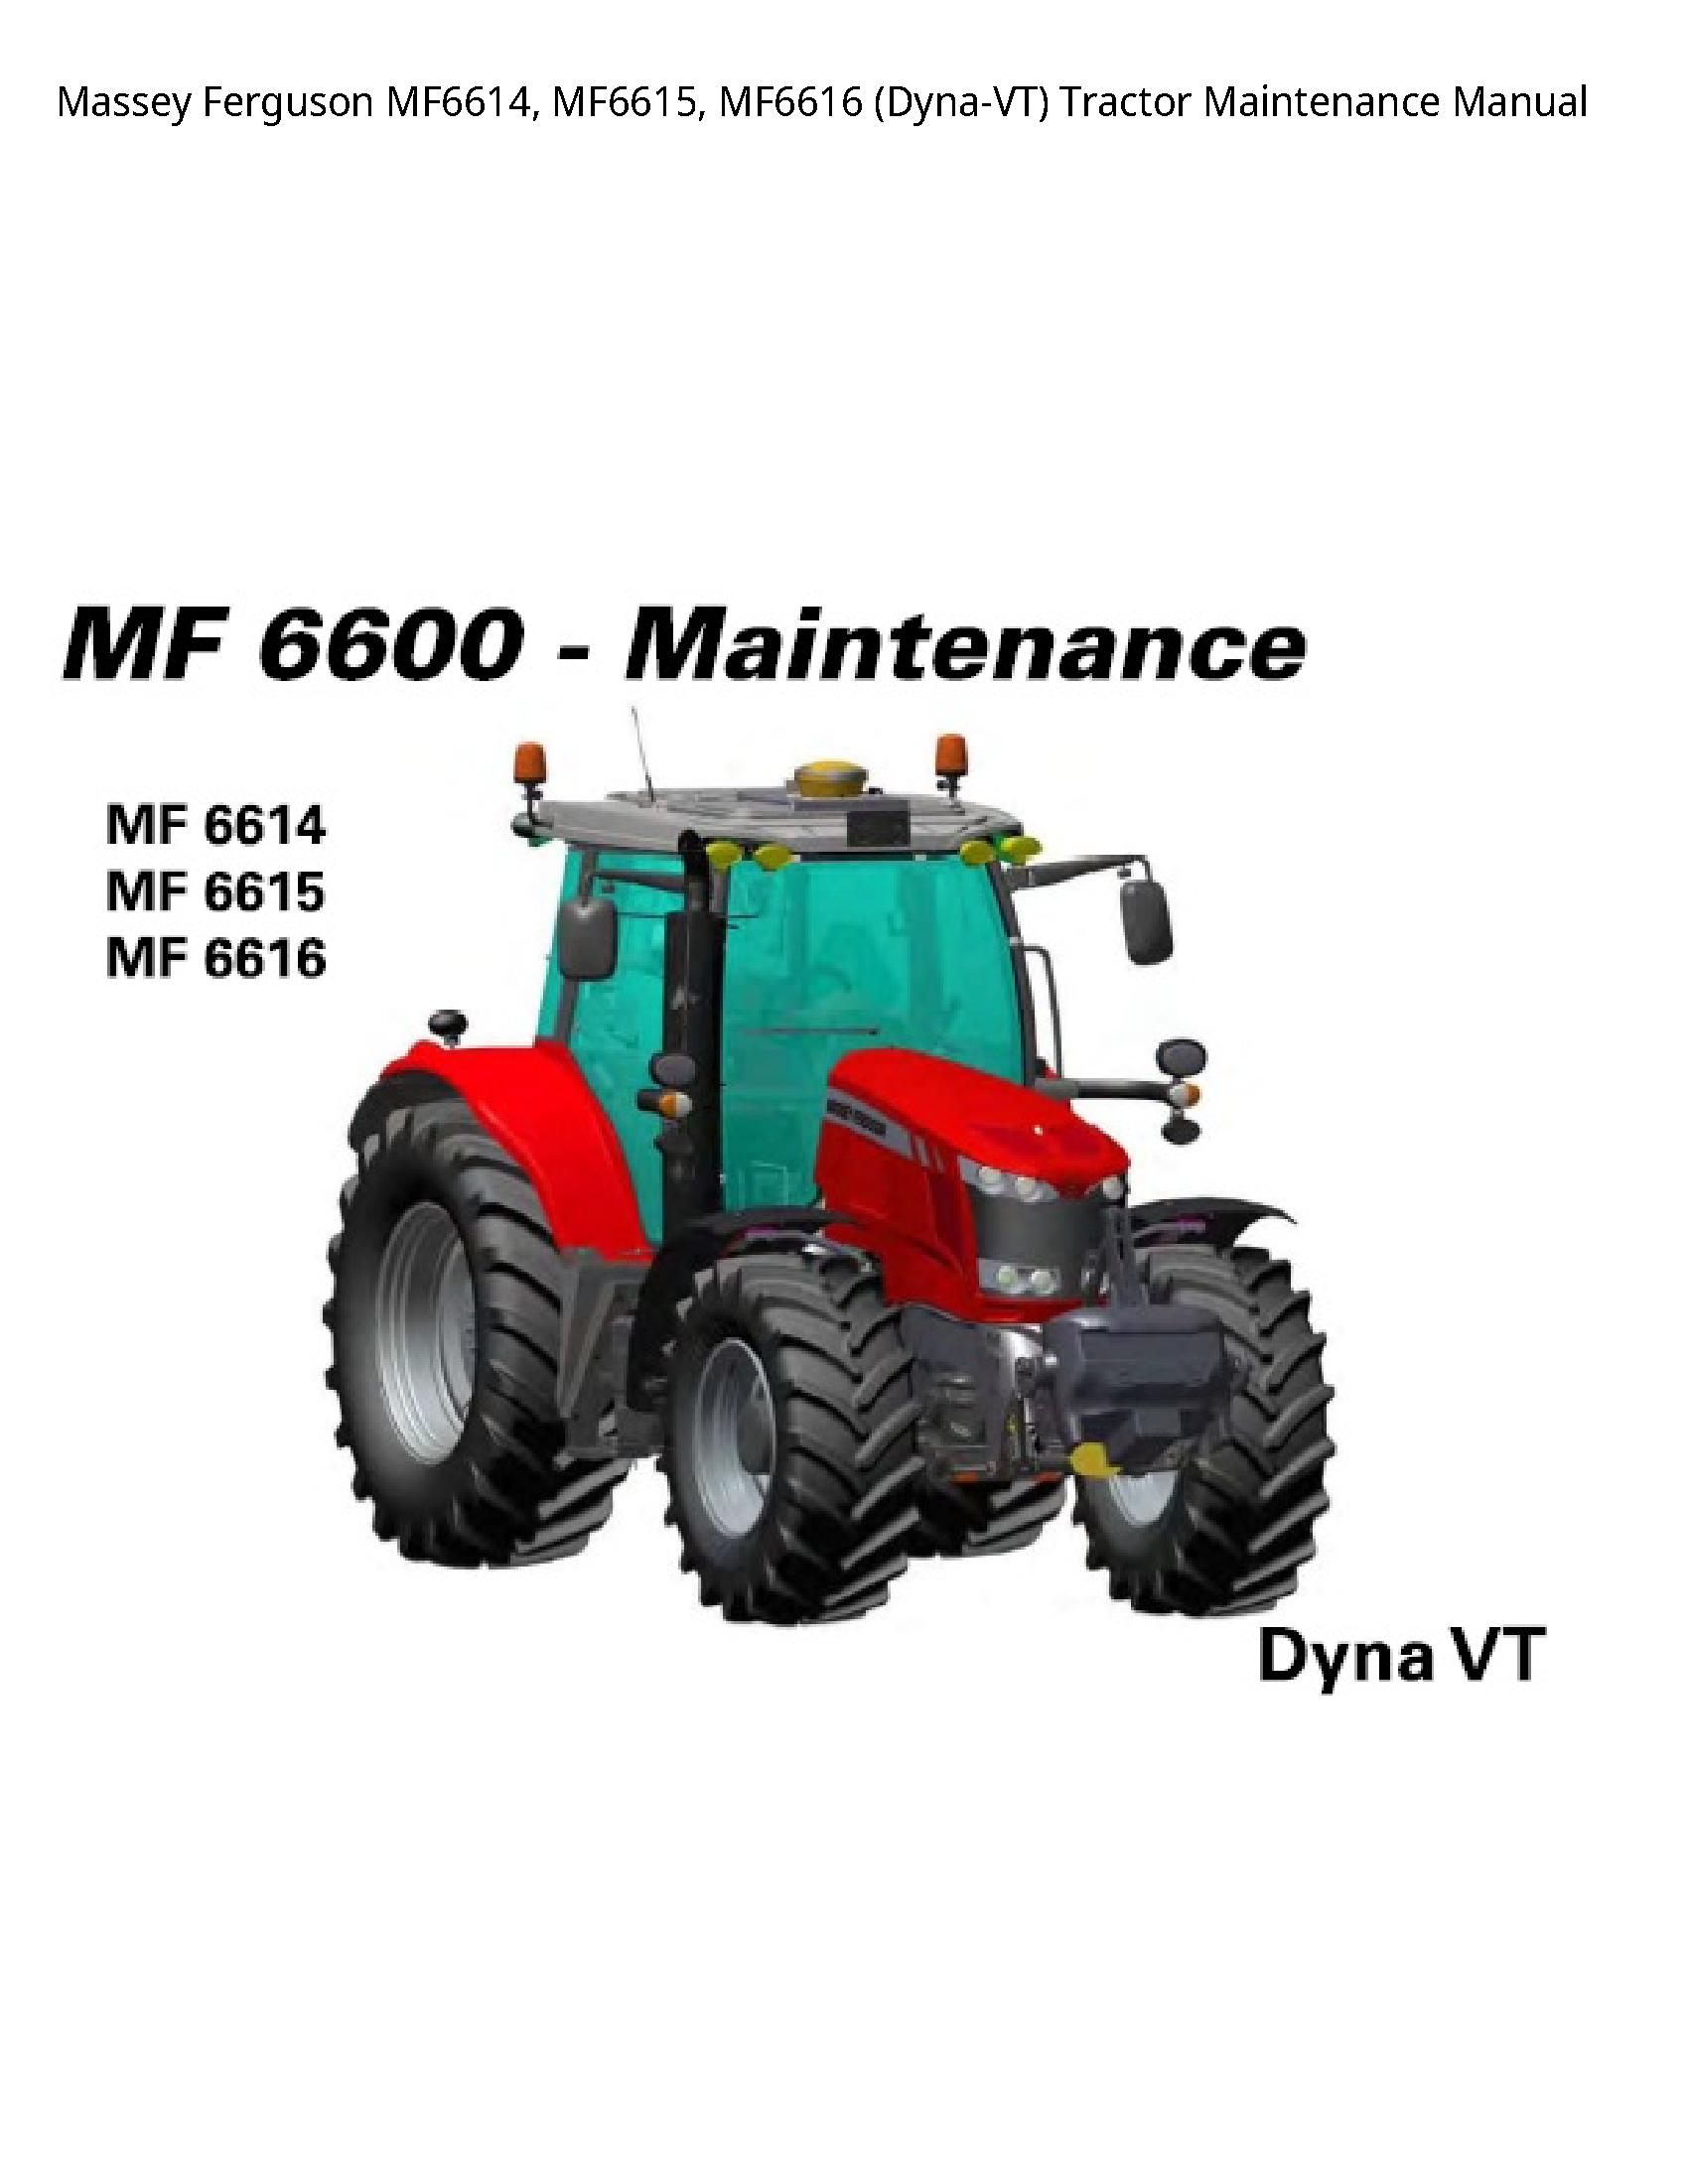 Massey Ferguson MF6614 (Dyna-VT) Tractor Maintenance manual